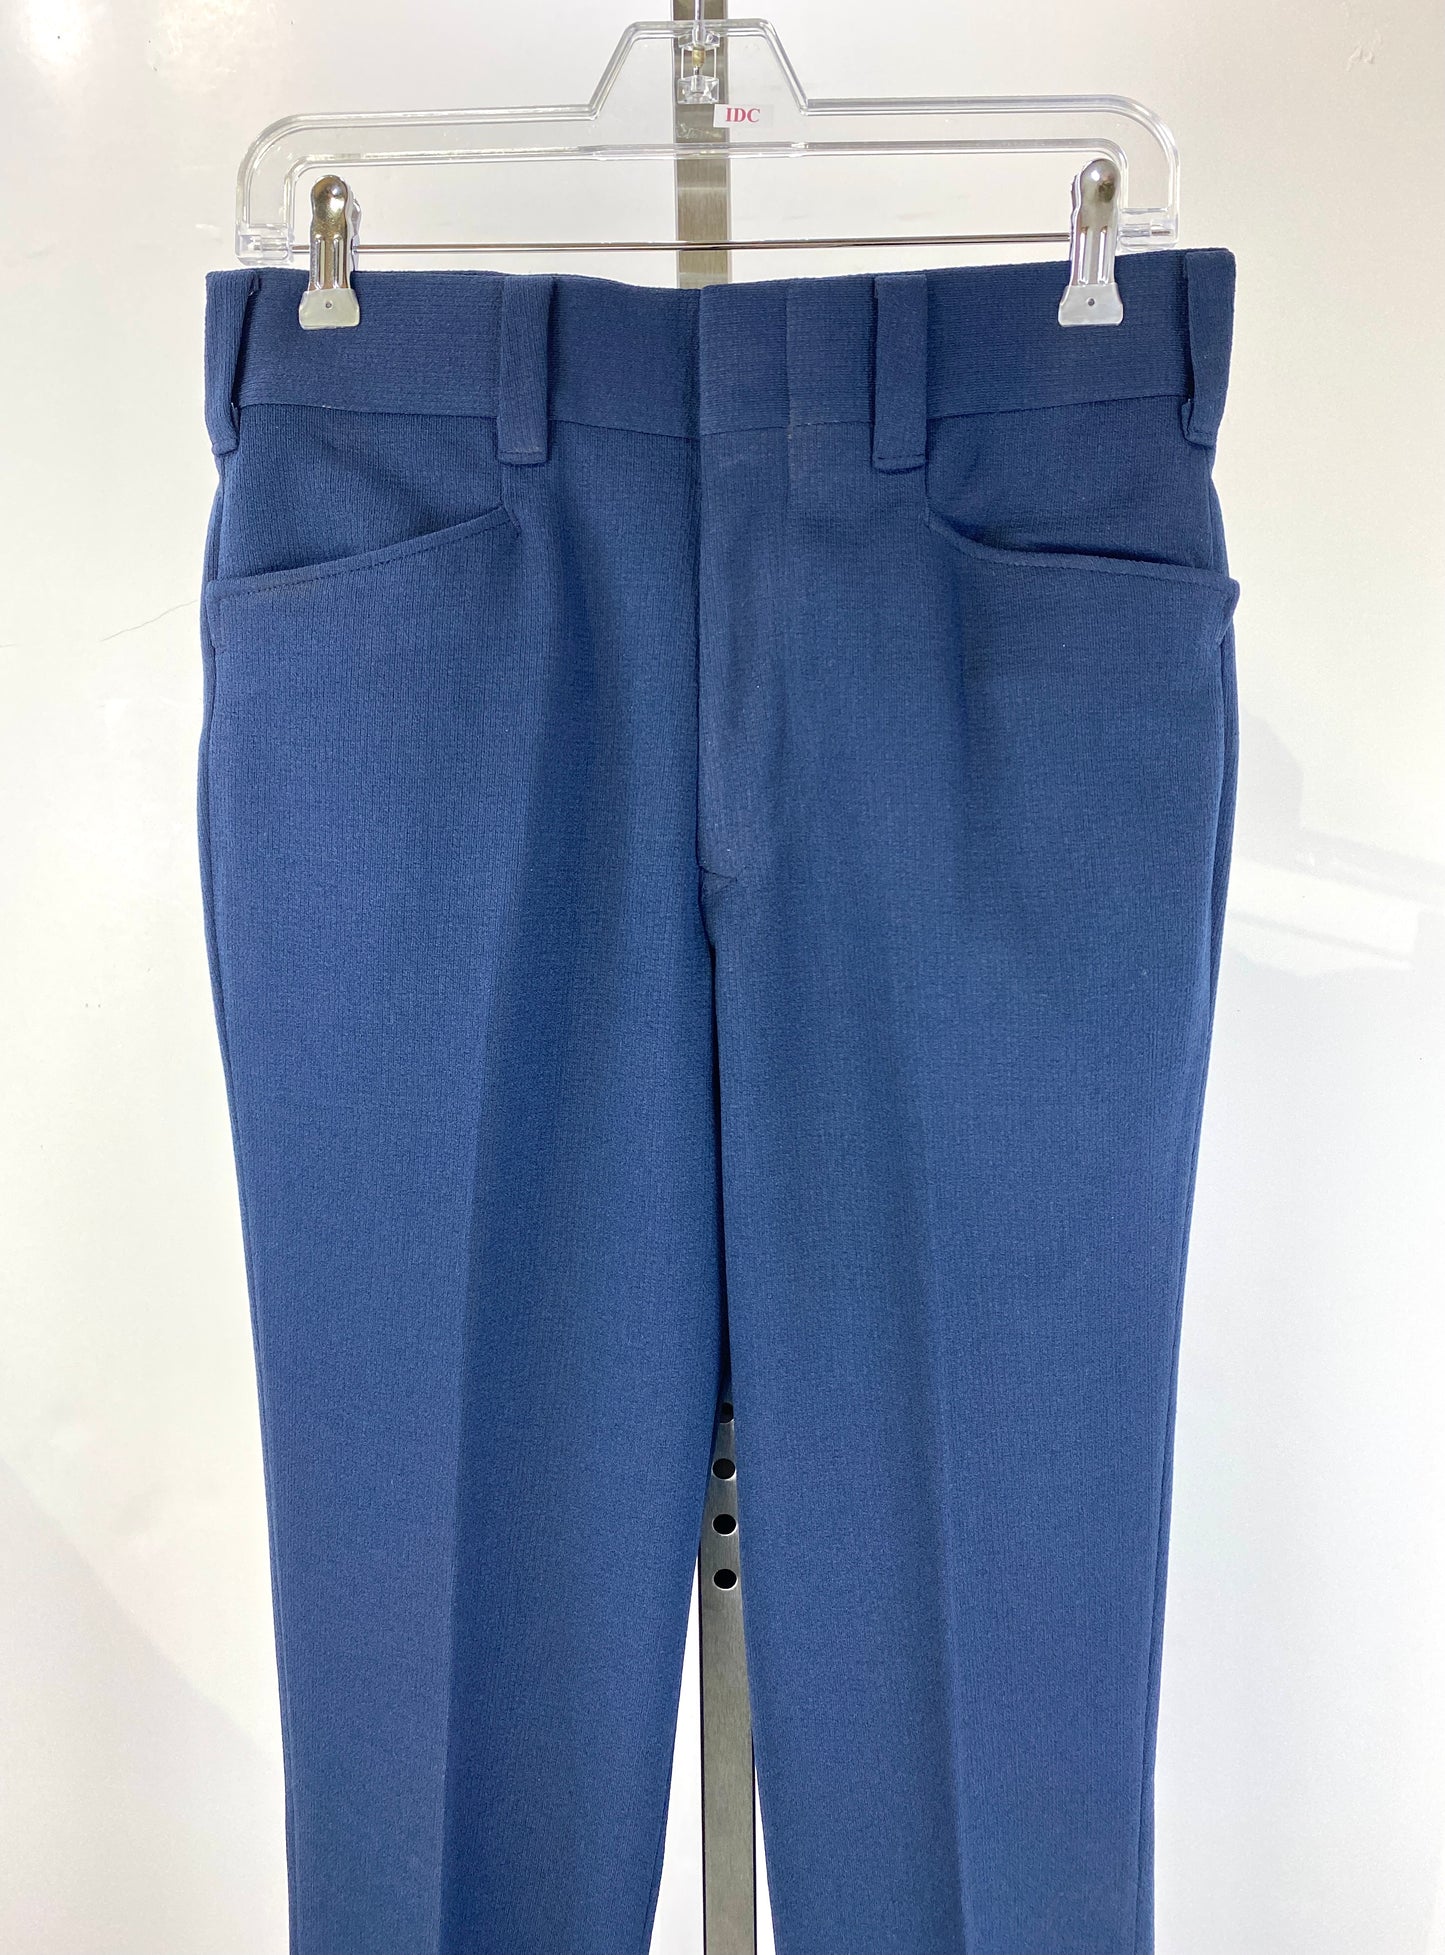 Vintage 1970s Deadstock Navy Slacks, Men's Flared Poly Trousers, NOS